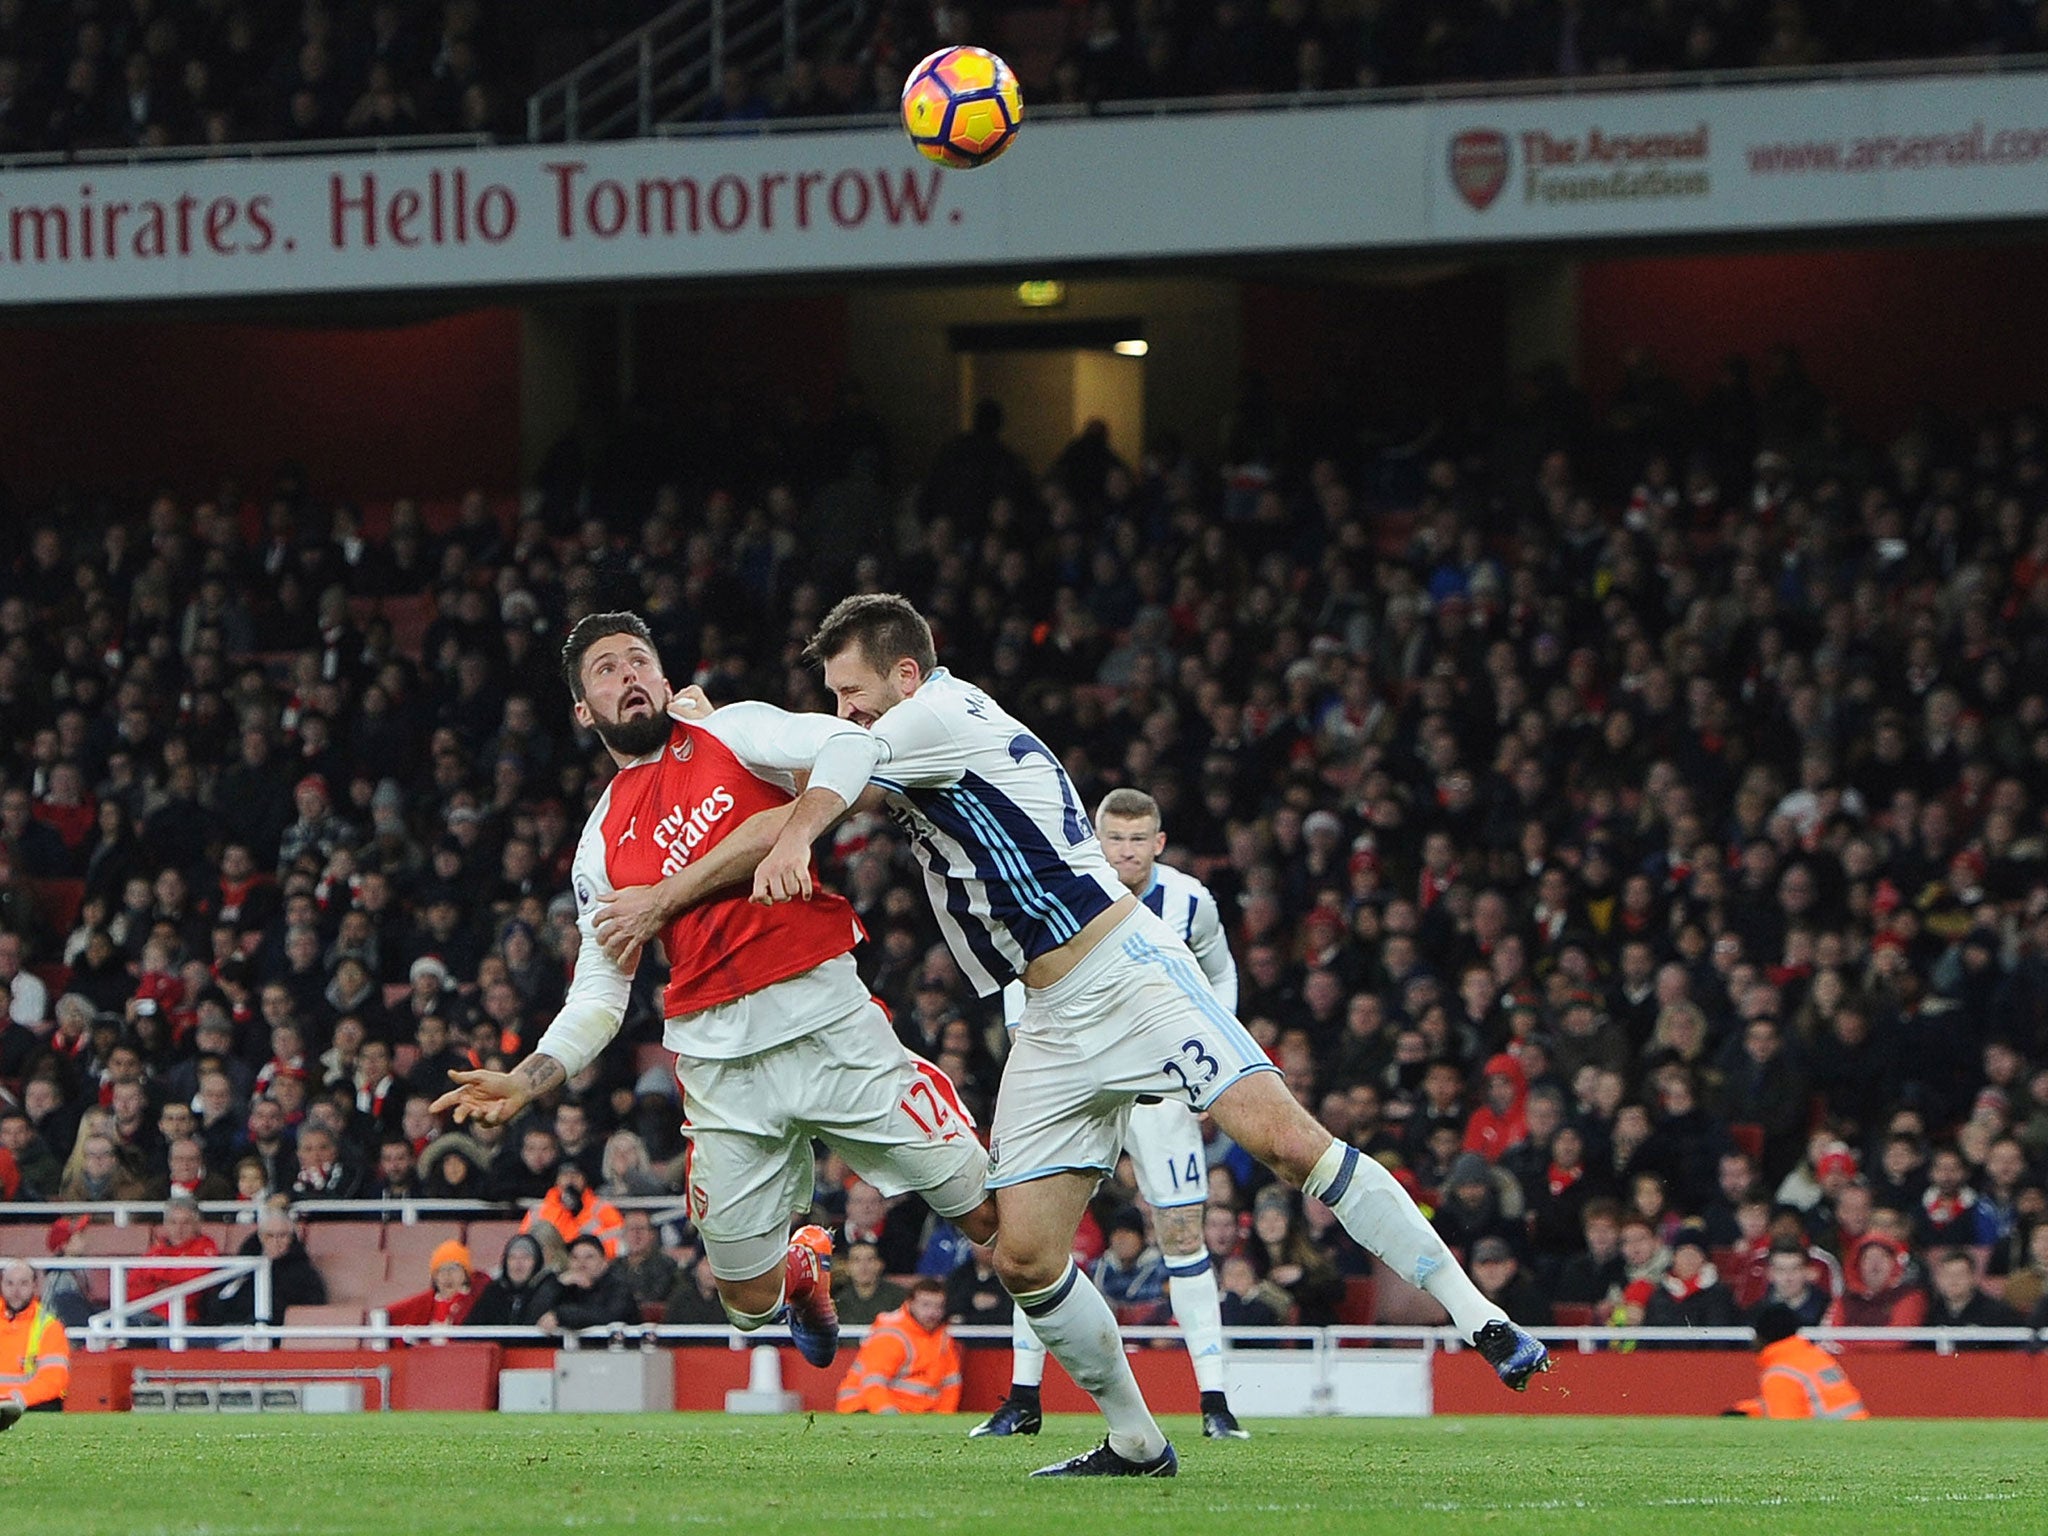 &#13;
Giroud heads home Arsenal's winning goal after out-muscling Gareth McAuley &#13;